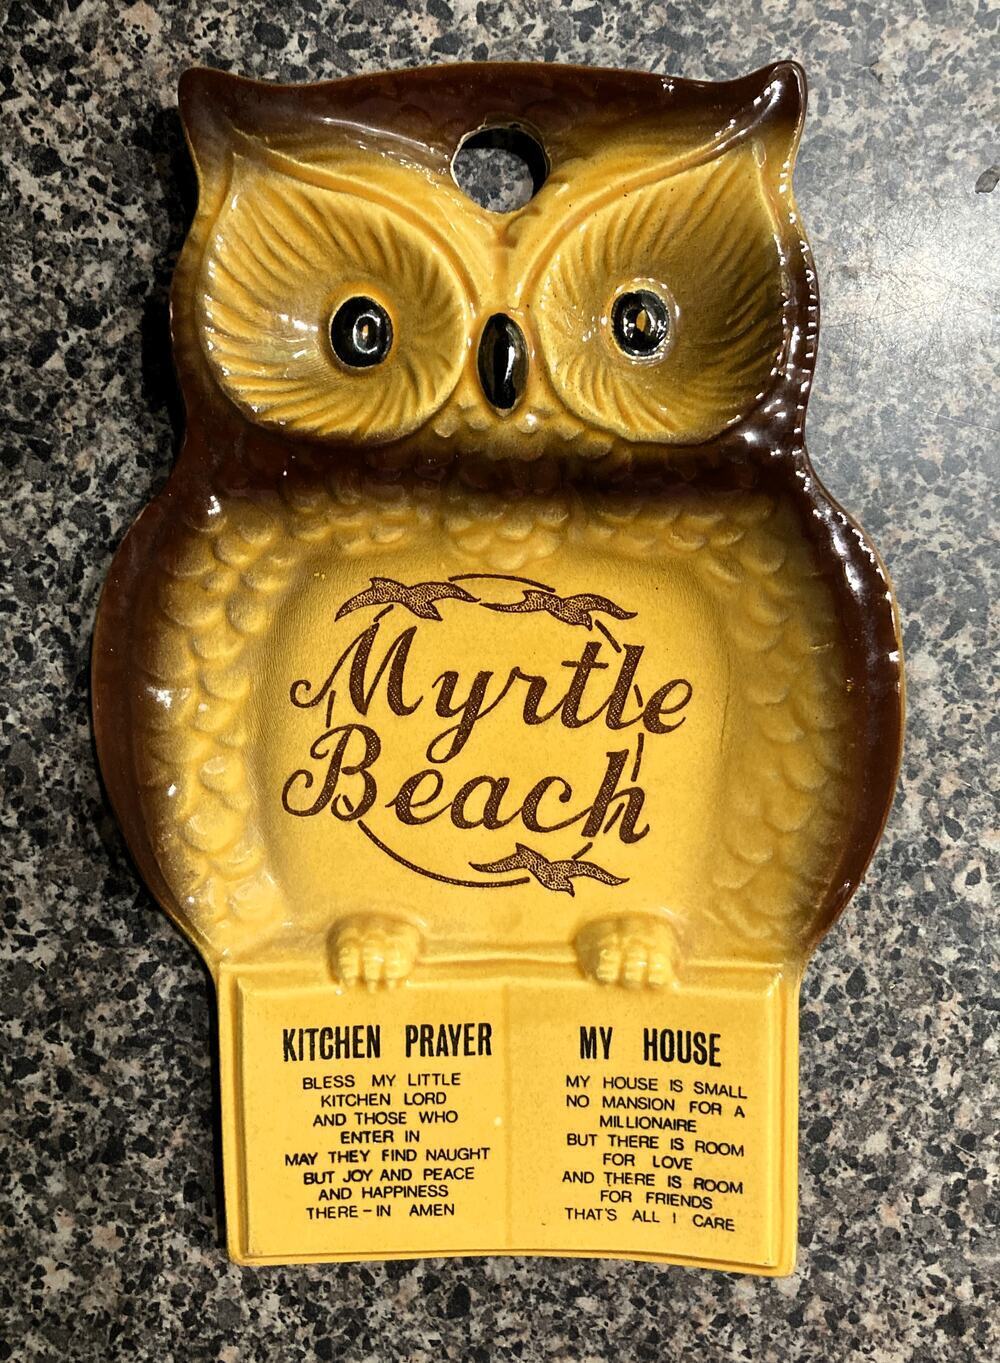 Vintage Myrtle Beach Owl Souvenir Kitchen Prayer/My House Spoon Rest